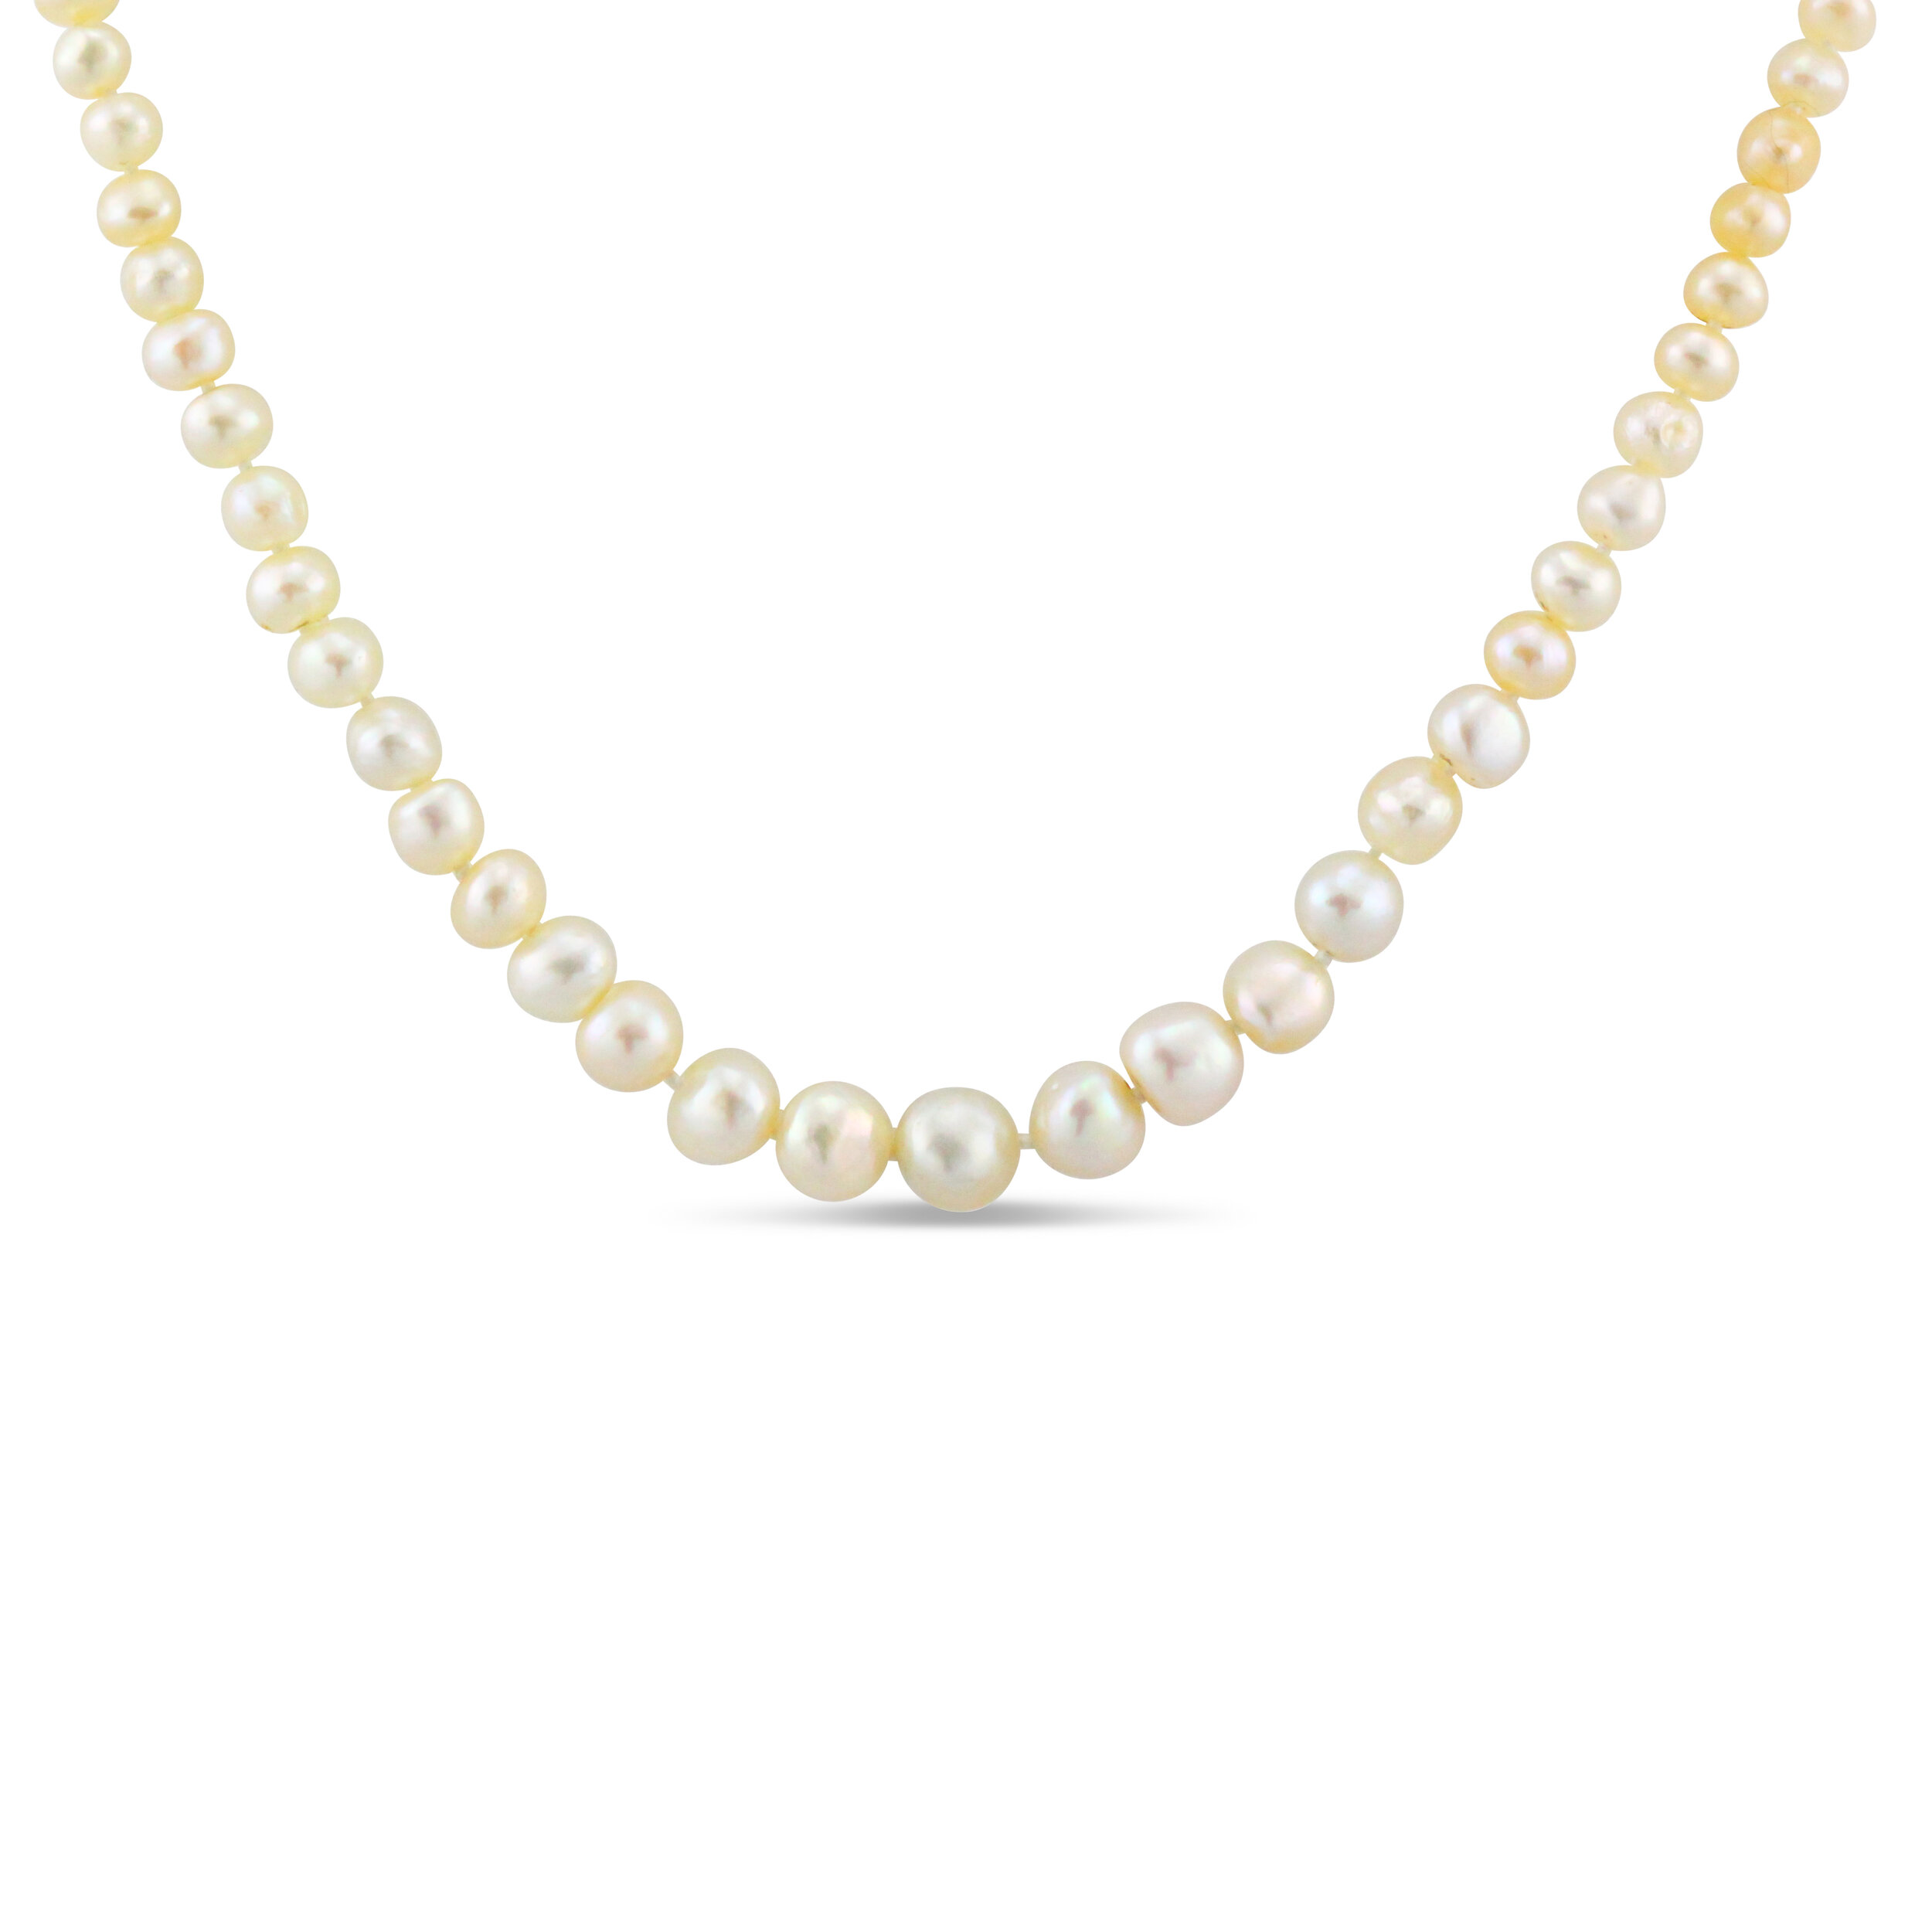 4 natural pearls.jpg